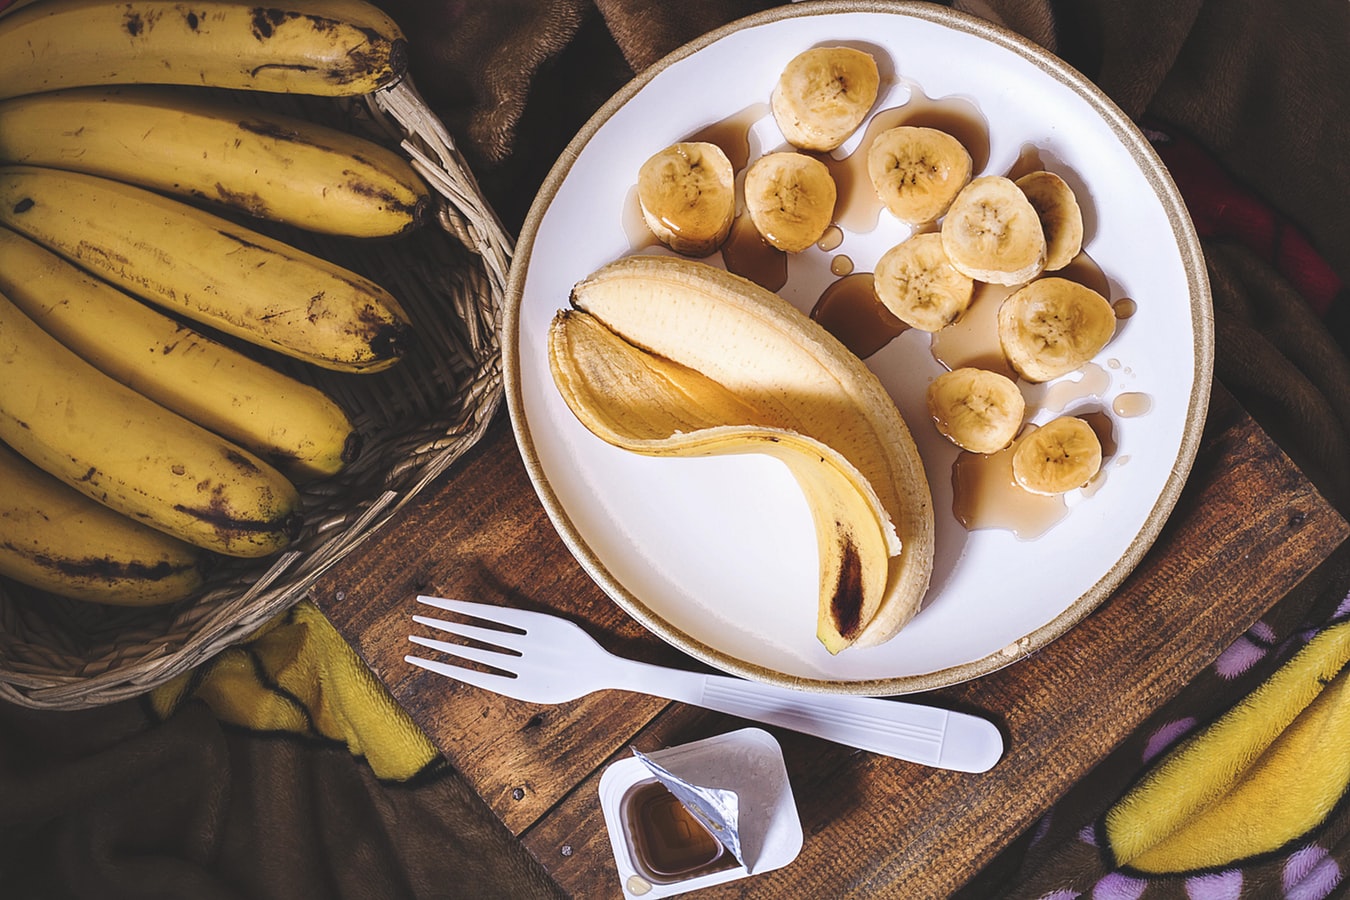 Bananas are potassium and magnesium rich food